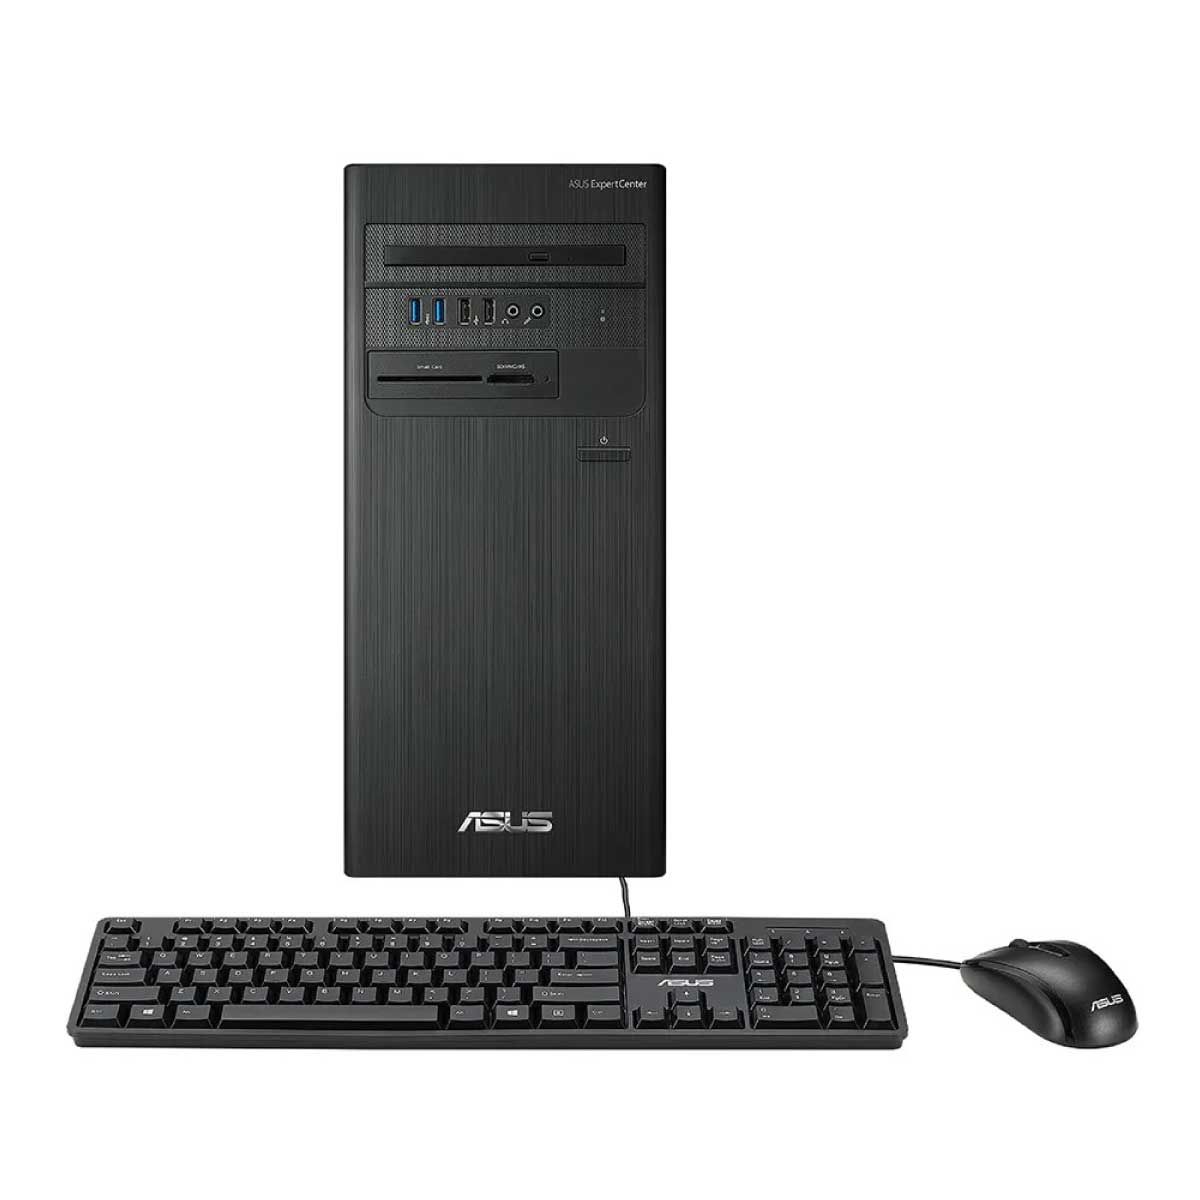 DESKTOP PC (คอมพิวเตอร์ตั้งโต๊ะ) ASUS S500TE-513400003WS